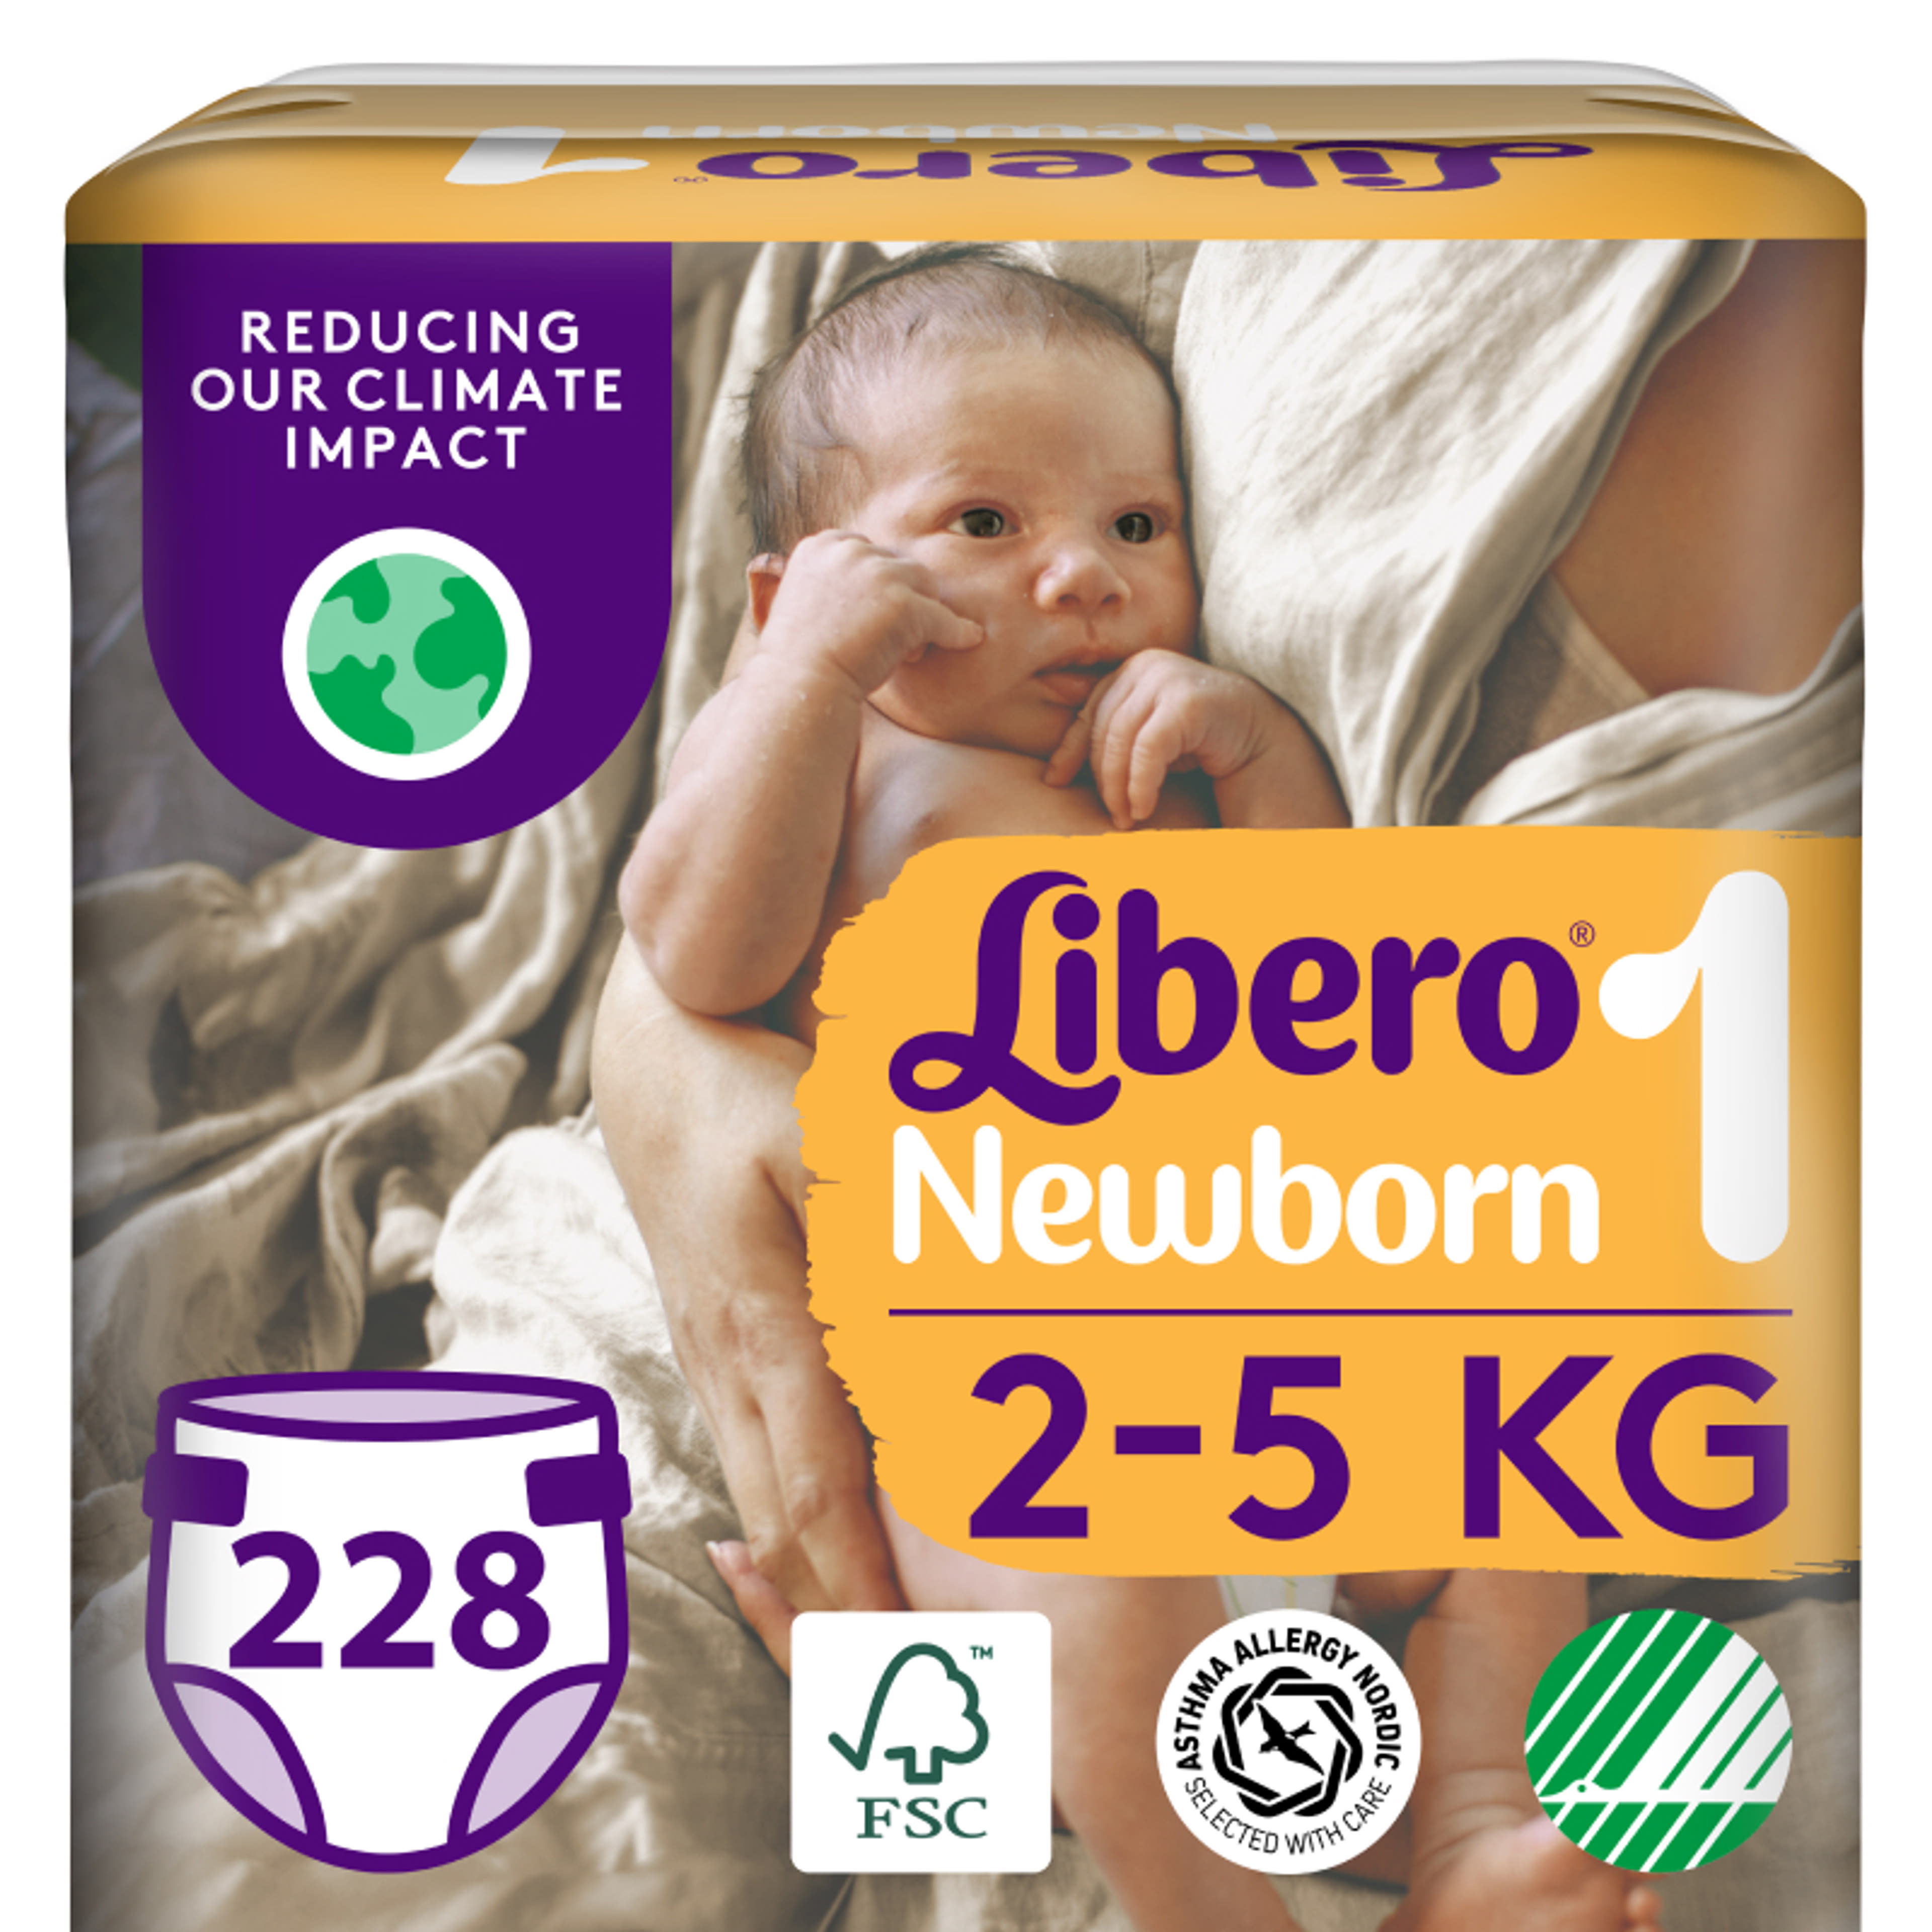 Libero Newborn nadrágpelenka, méret: 1, 2-5 kg - 228 db